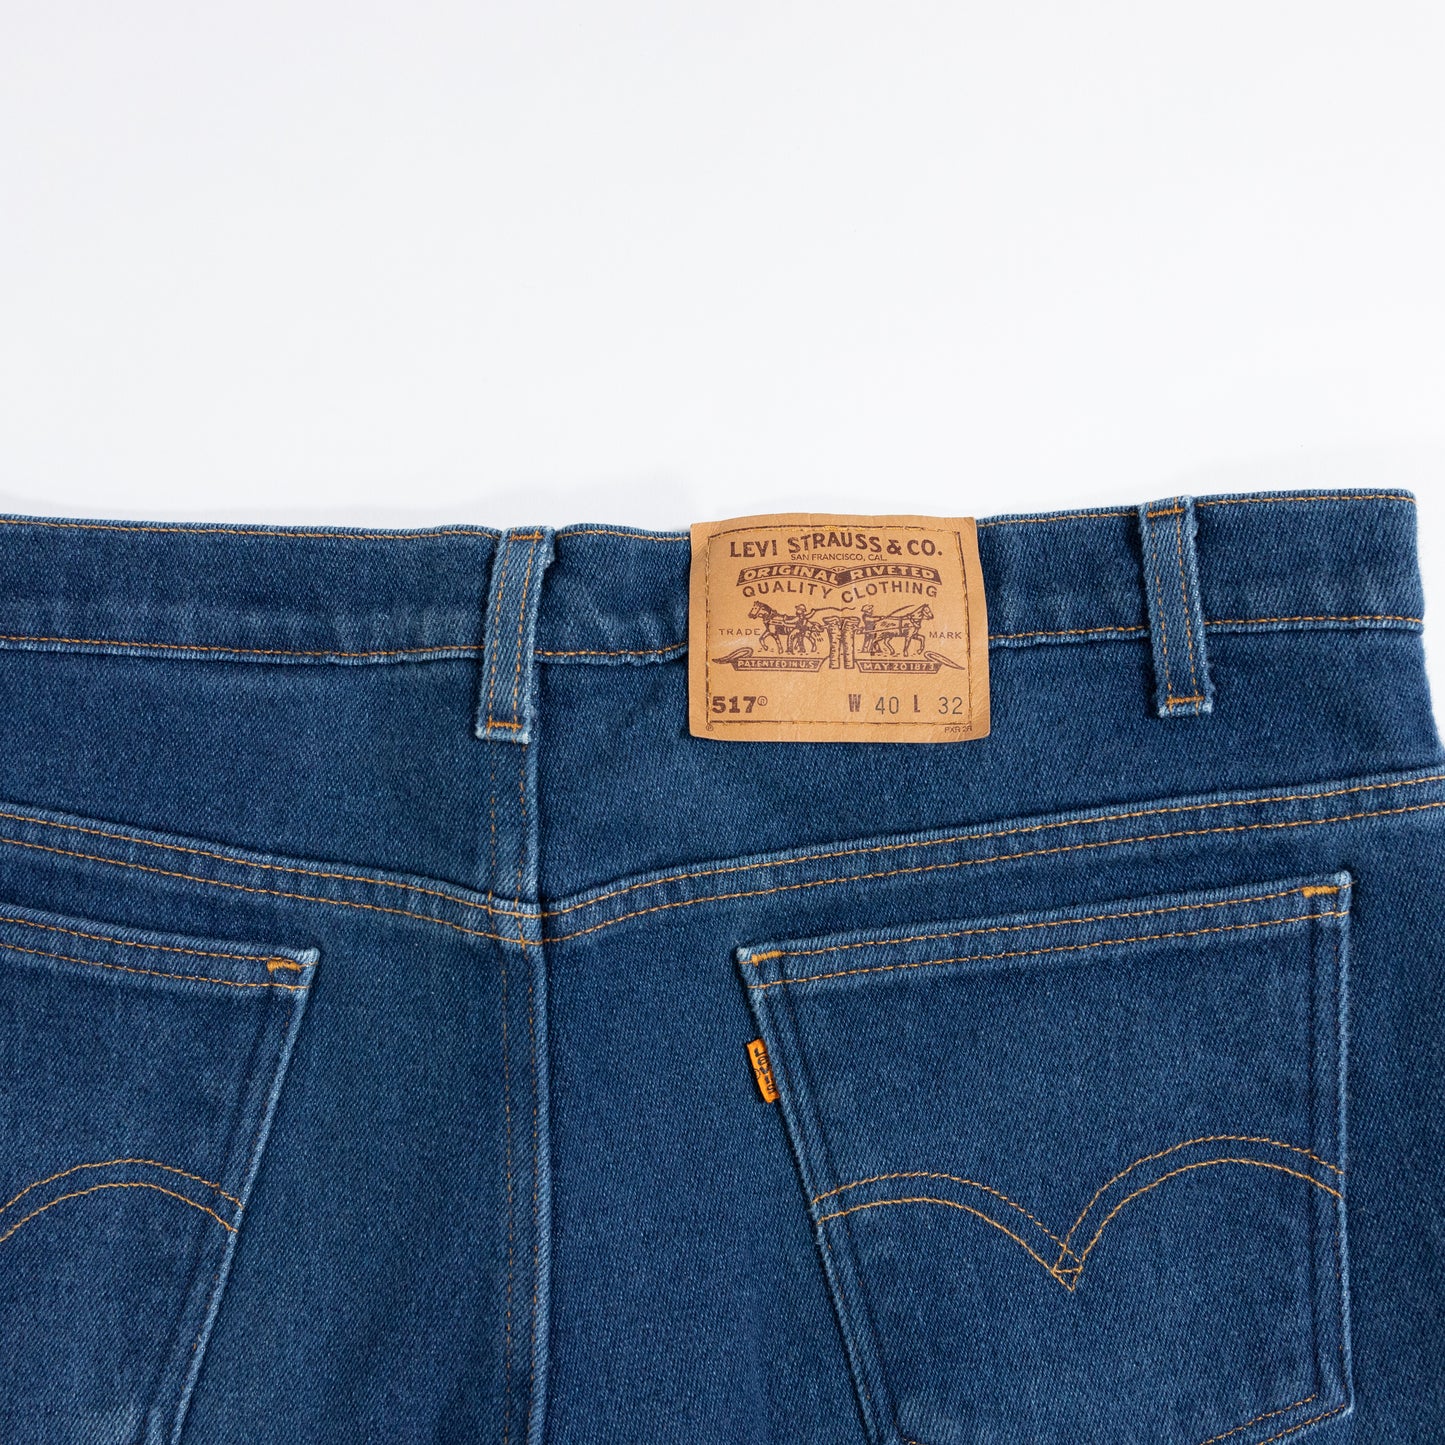 90s Levi's 517 Orange Tab Pants